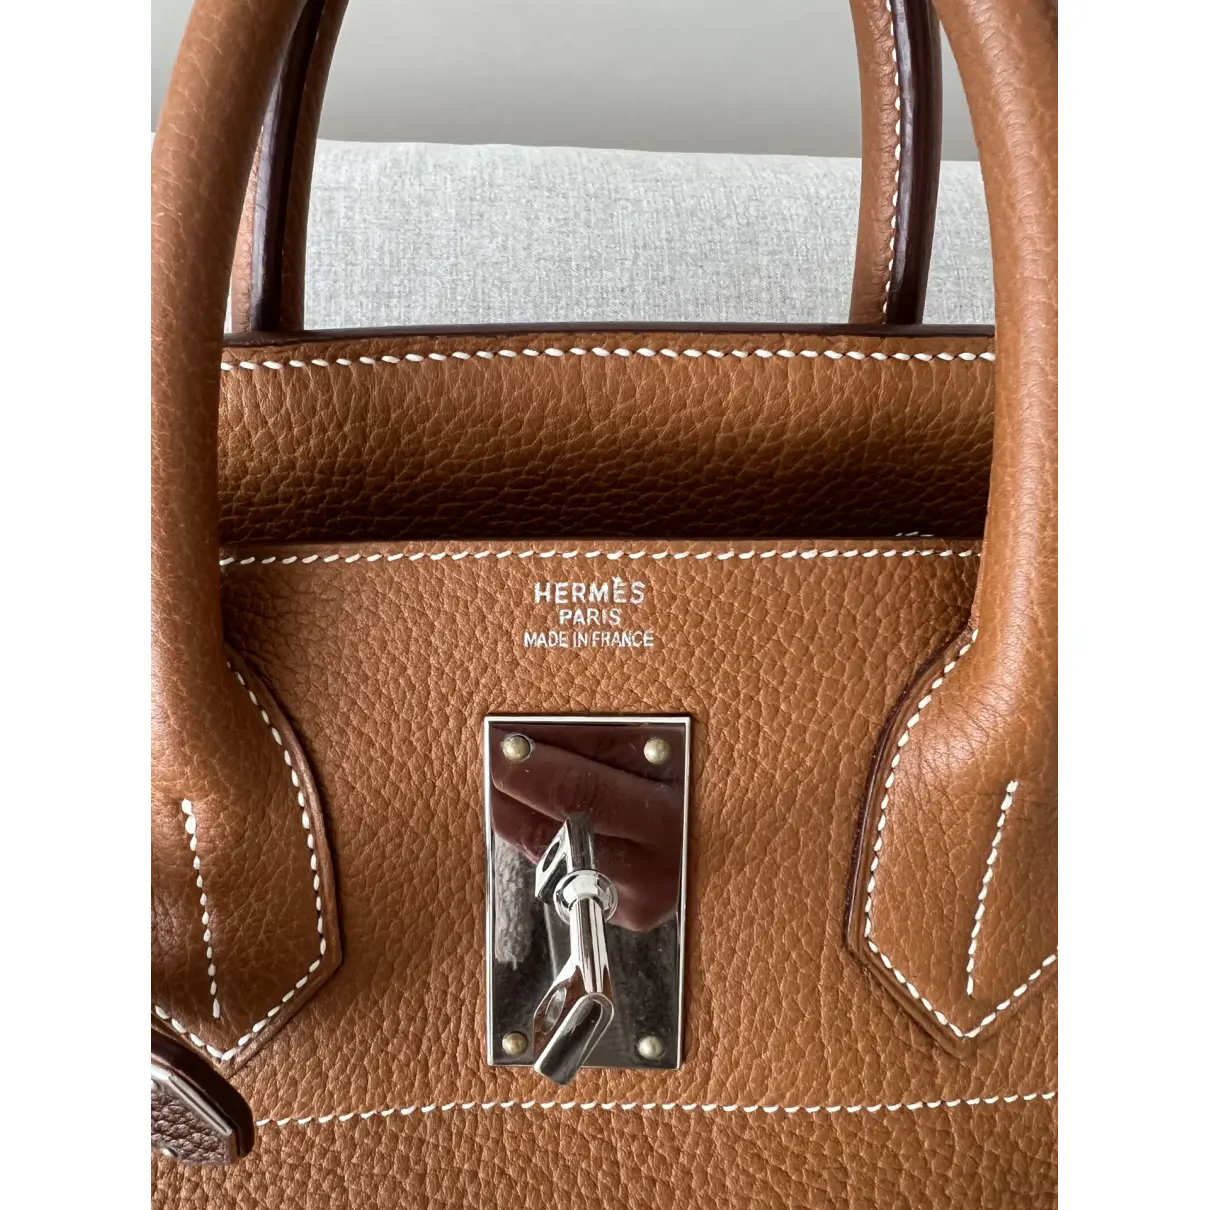 Buy Hermès Birkin Voyage leather travel bag online